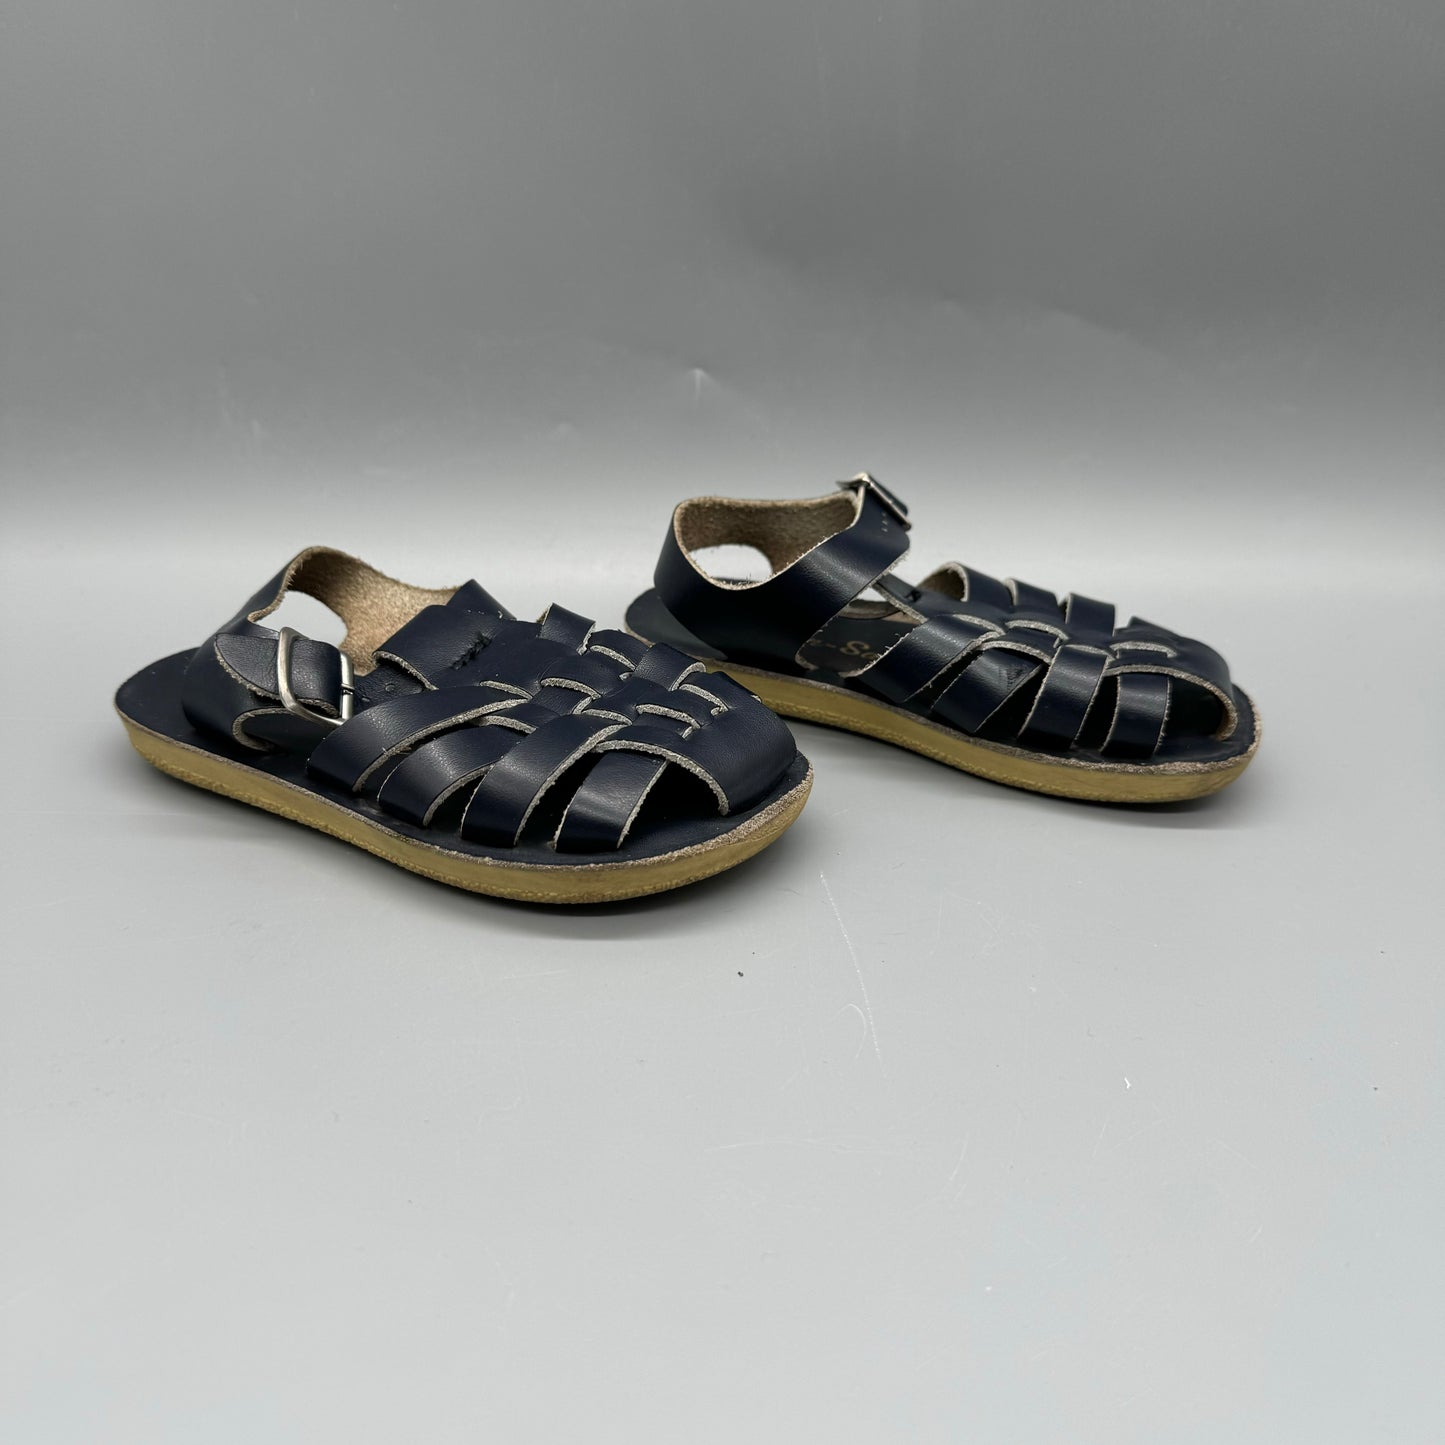 Salt Water / Sun-San Sailor sandals / US8